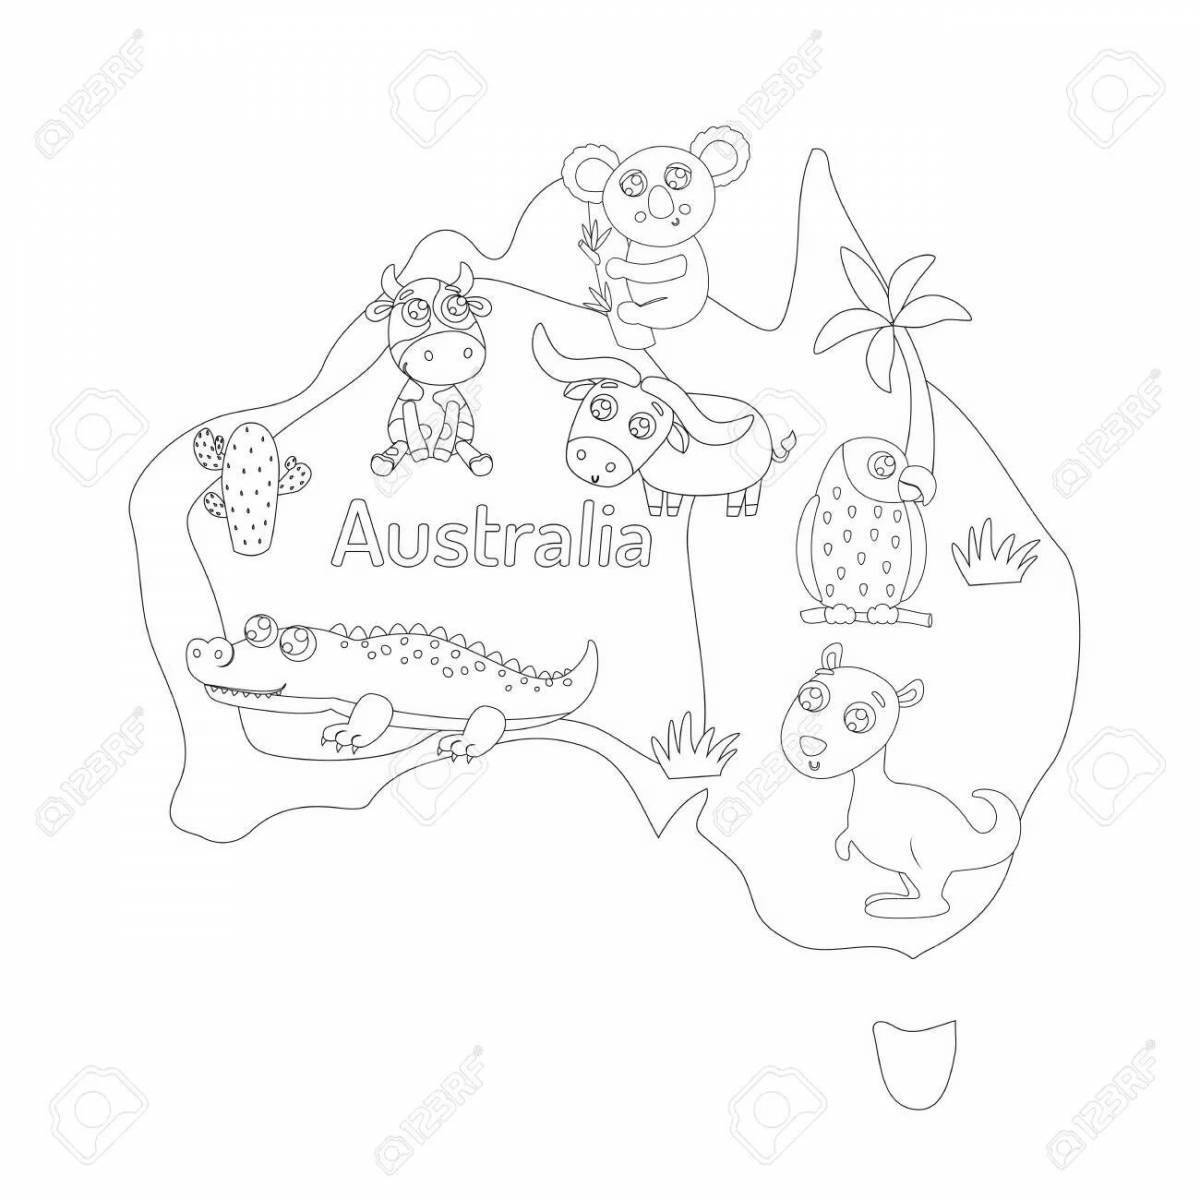 Attractive australia map coloring page